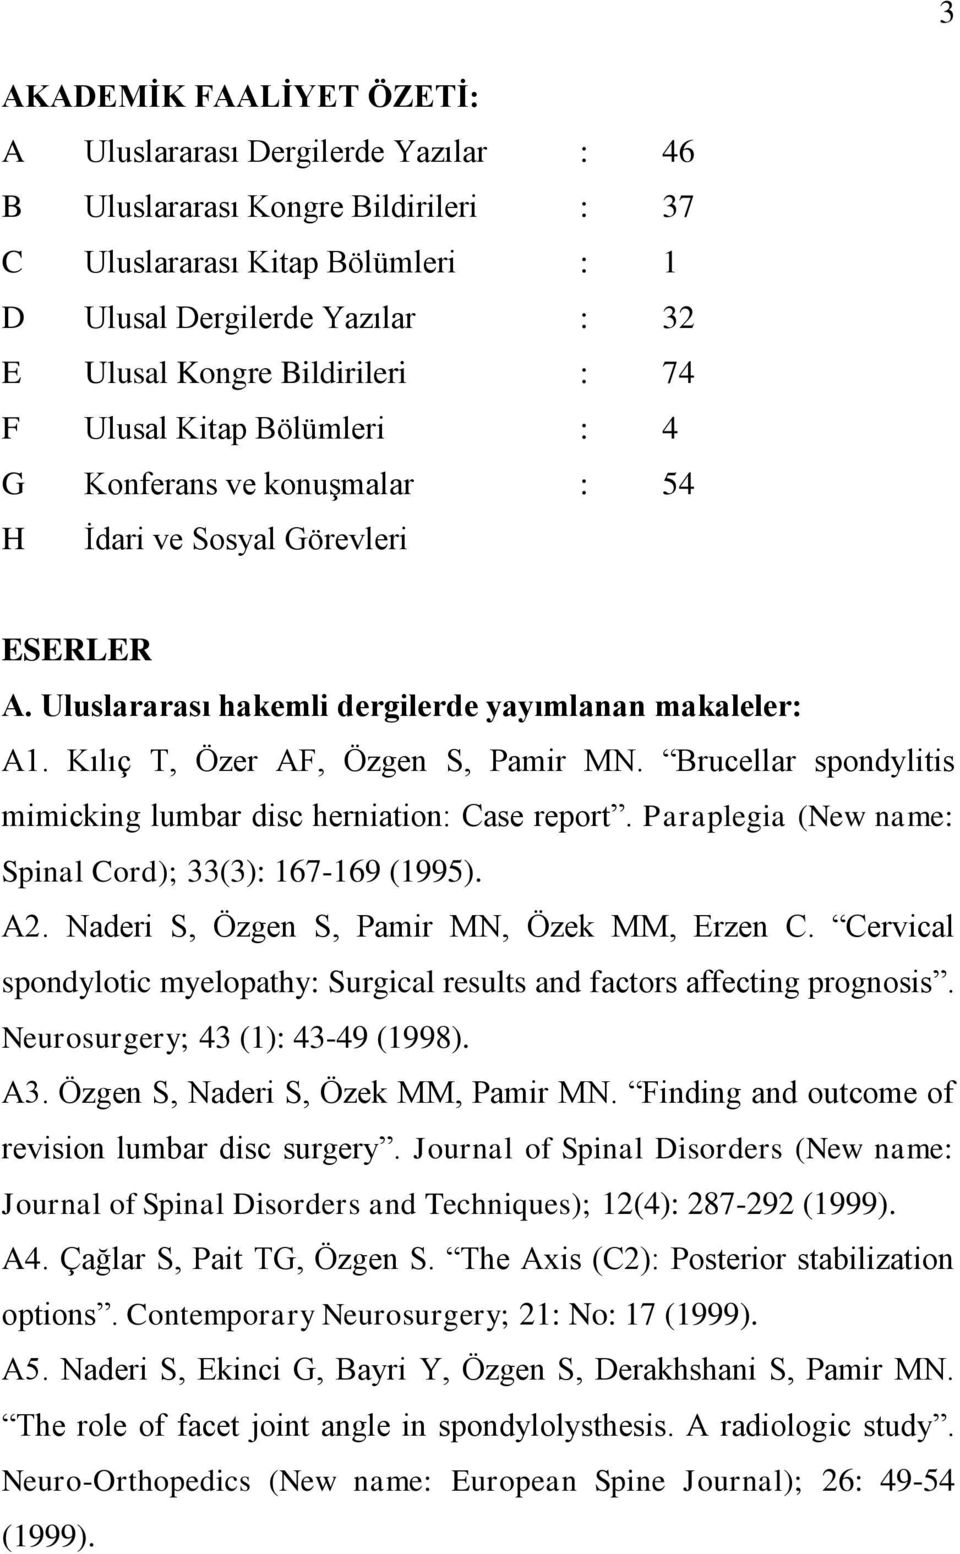 Kılıç T, Özer AF, Özgen S, Pamir MN. Brucellar spondylitis mimicking lumbar disc herniation: Case report. Paraplegia (New name: Spinal Cord); 33(3): 167-169 (1995). A2.